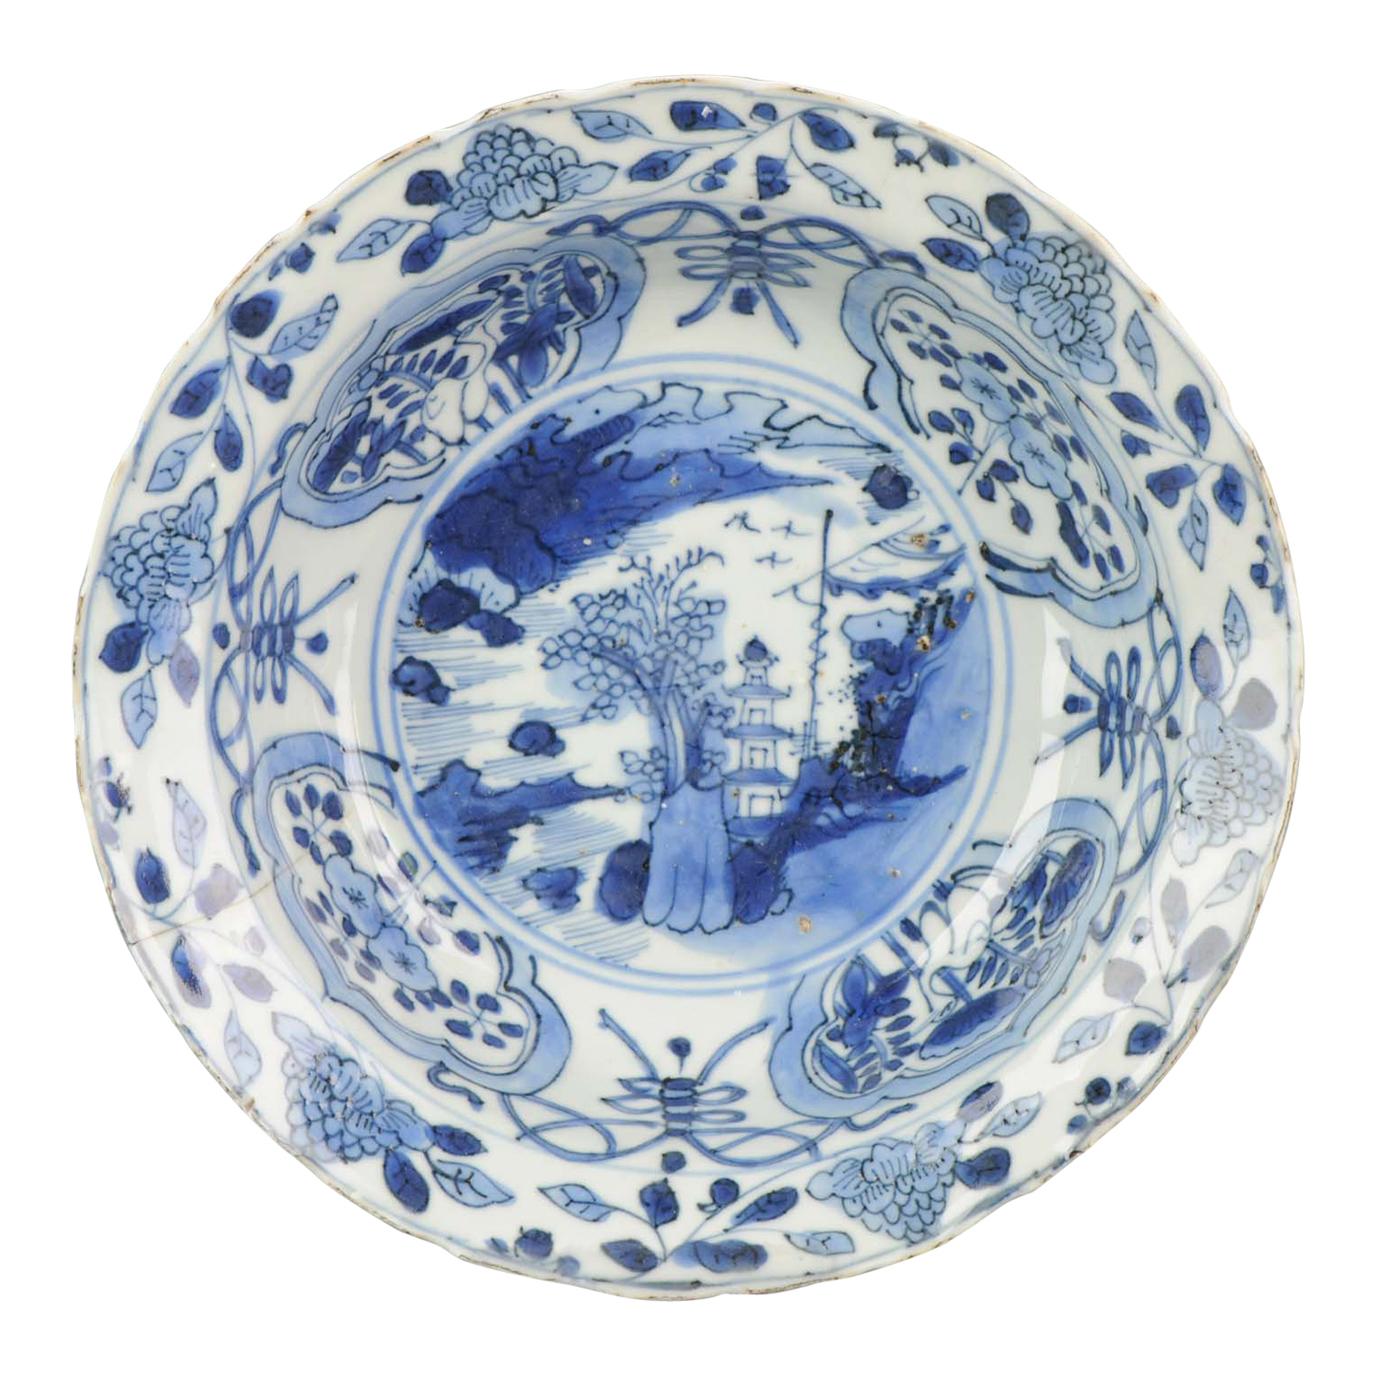 Antique Chinese 17th Century Porcelain Ming/Transitional Kraak Klapmuts